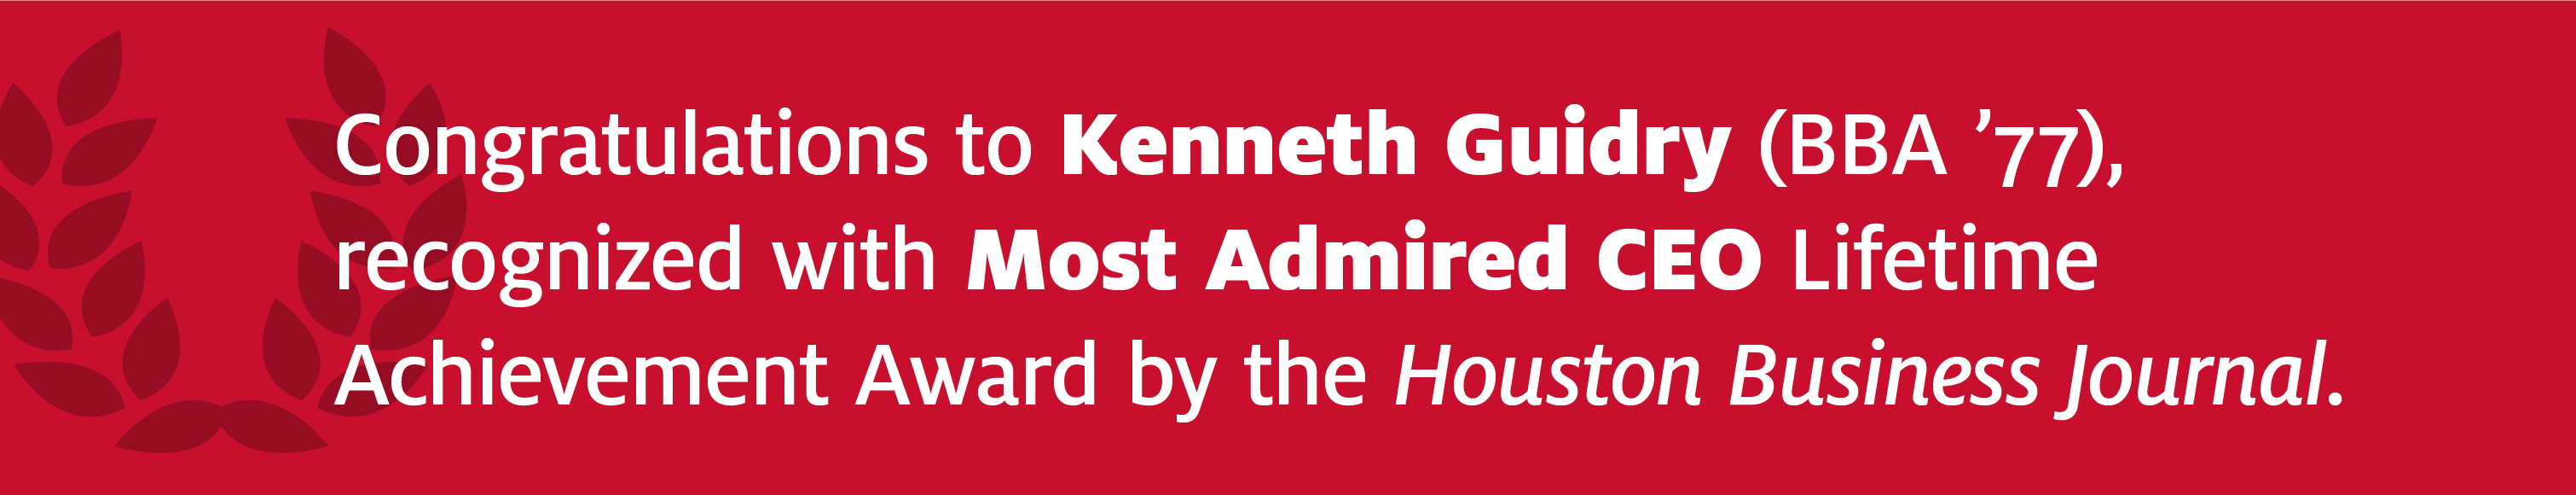 Congratulations Kenneth Guidry